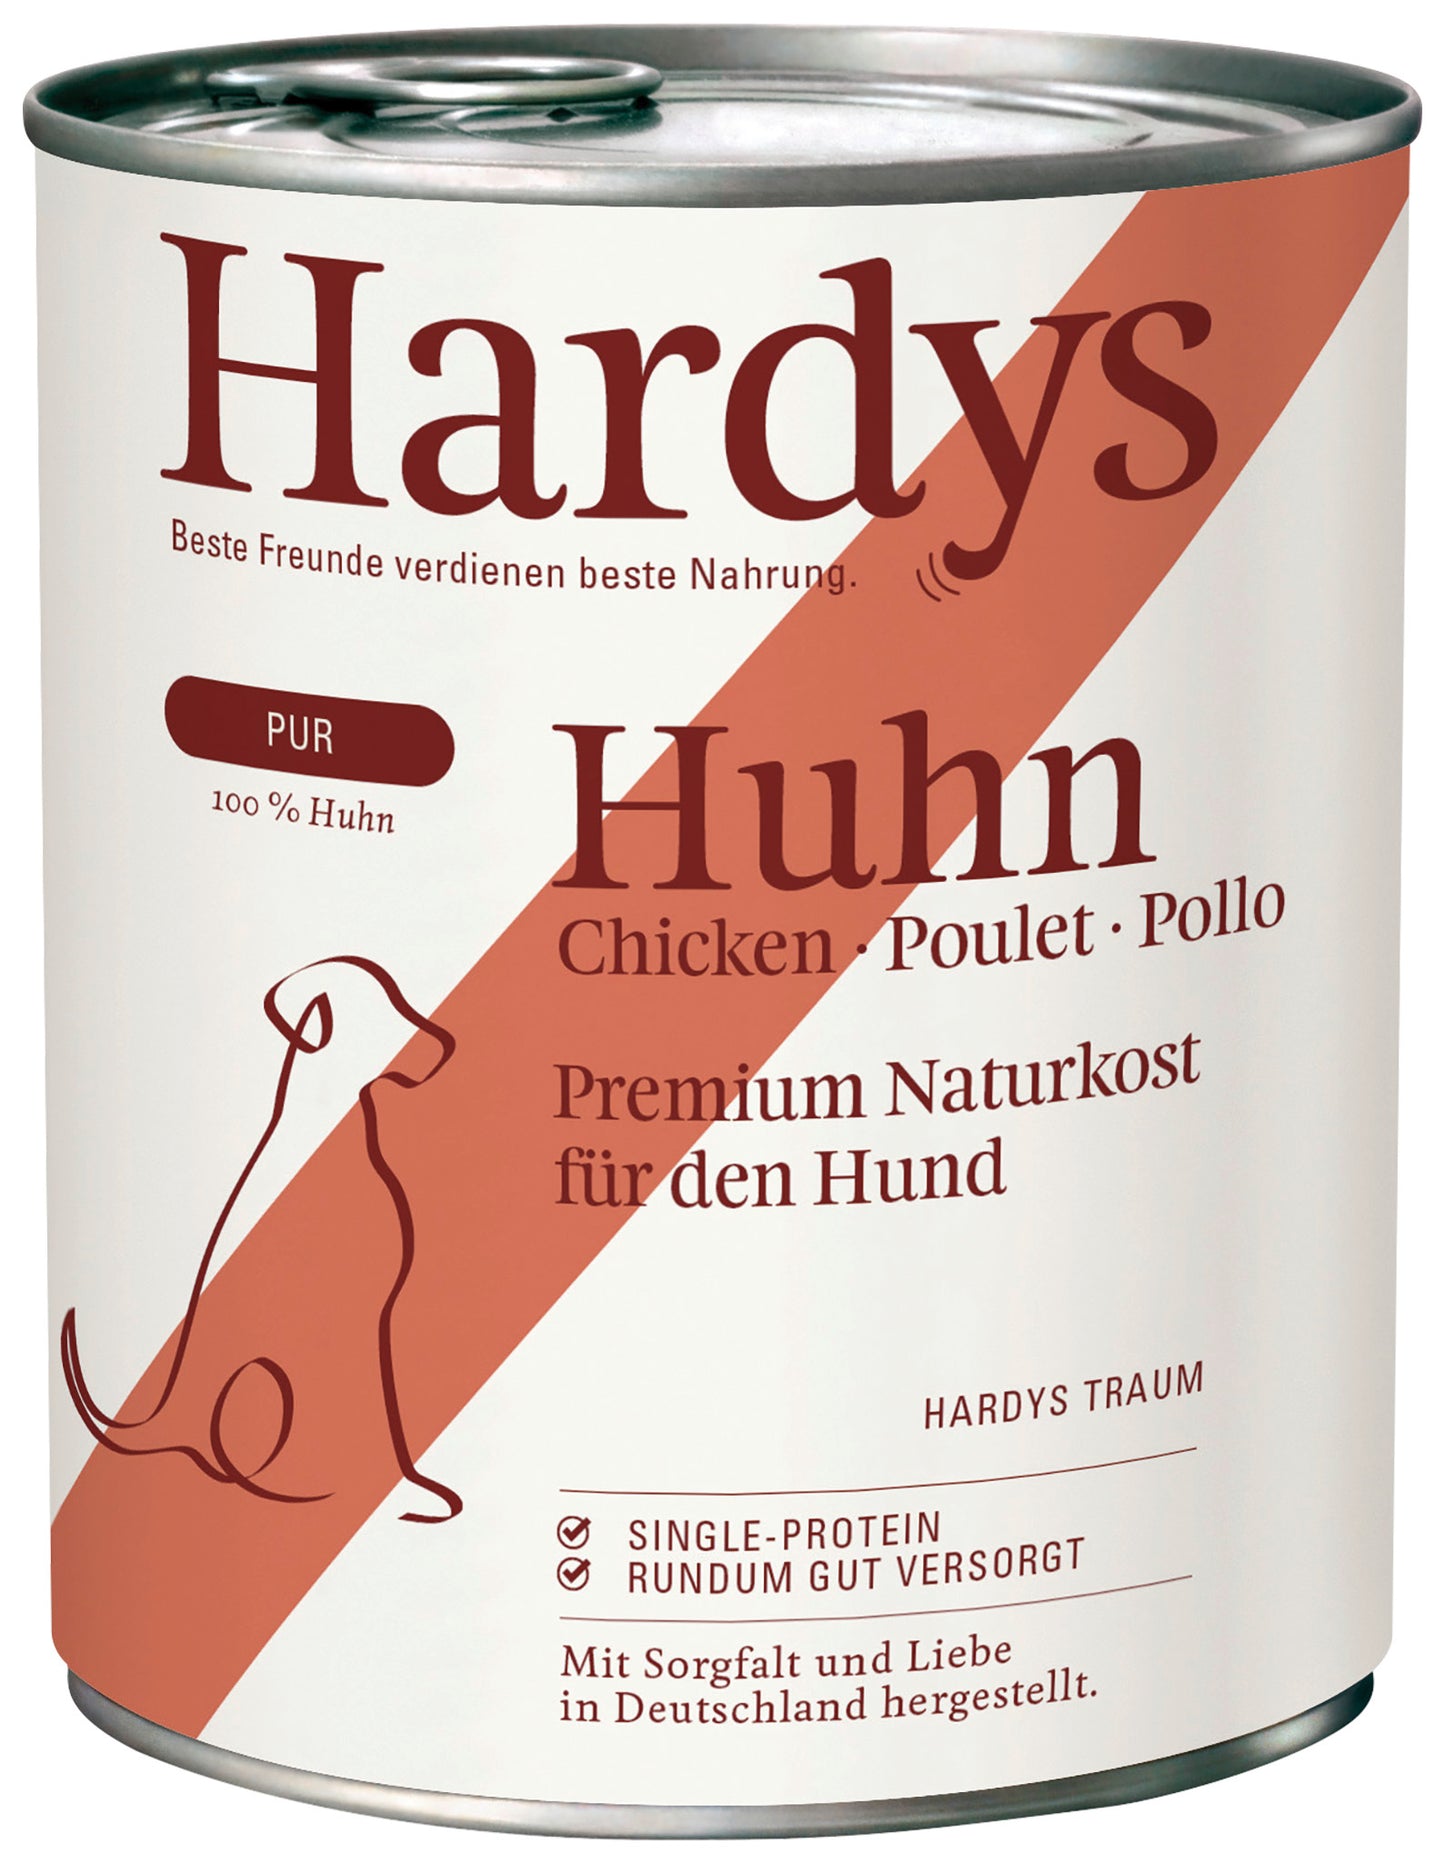 Hardys Chicken - Pure 800g